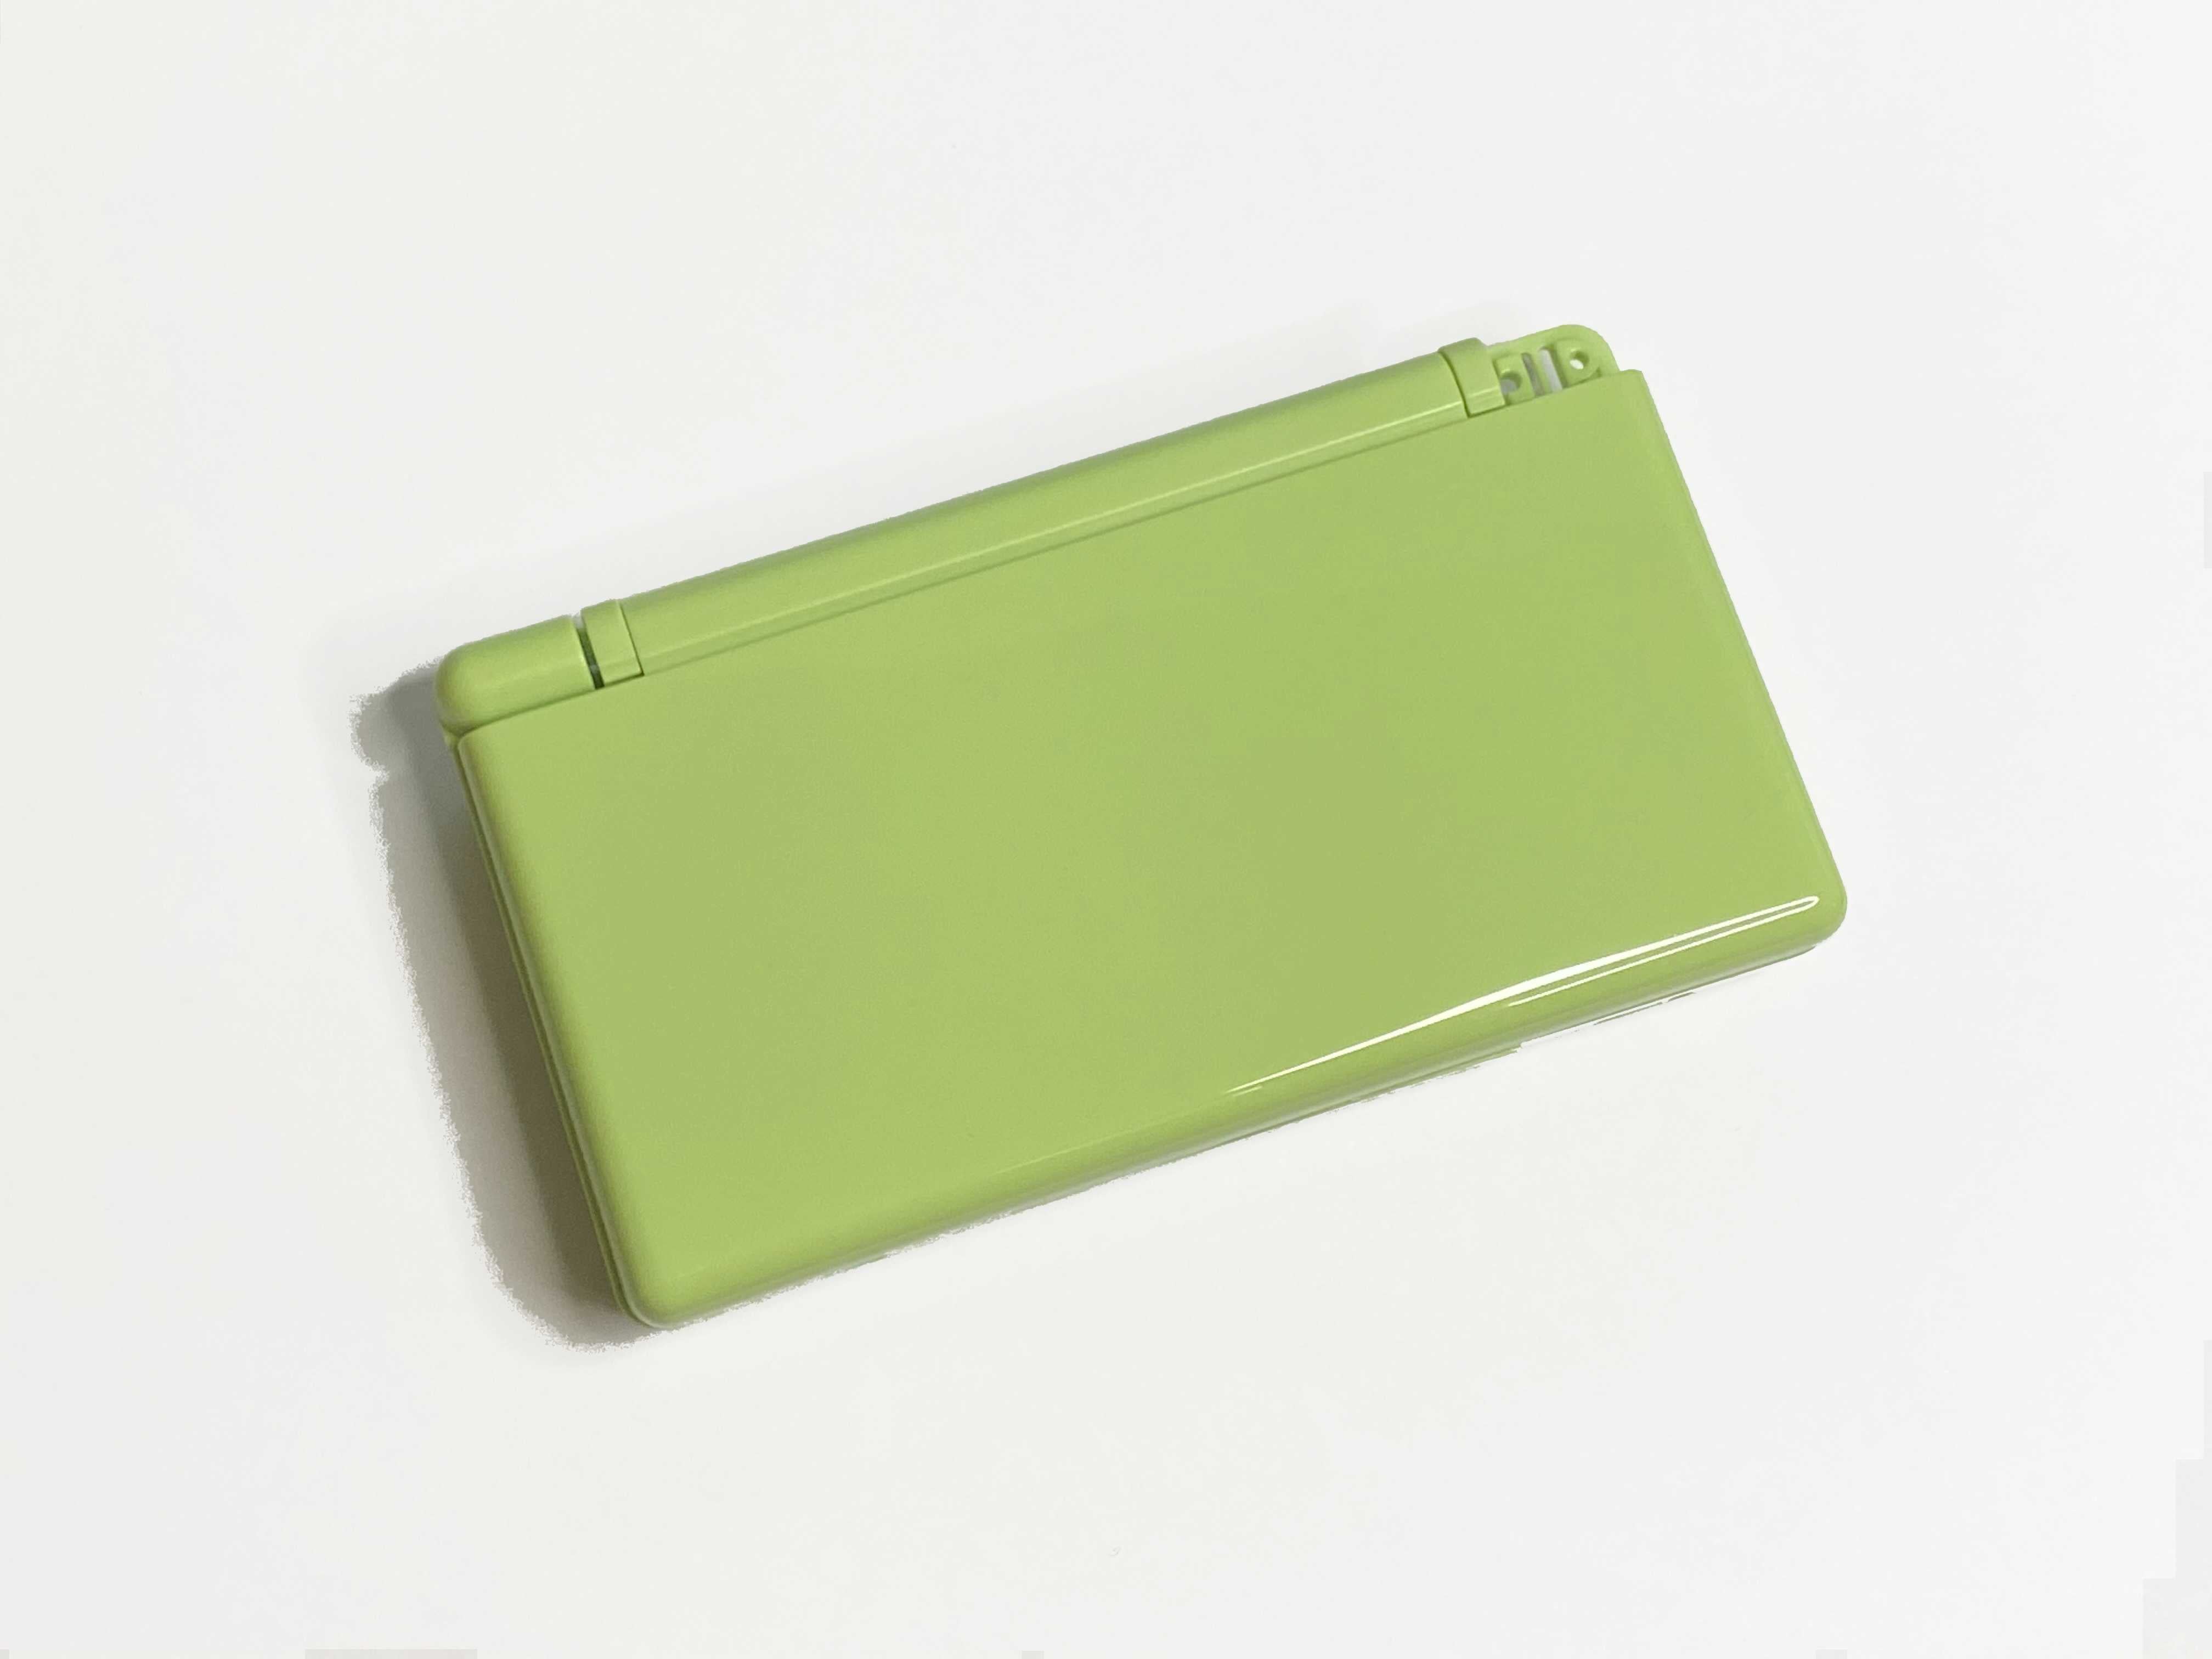 Nintendo DS Lite Shell